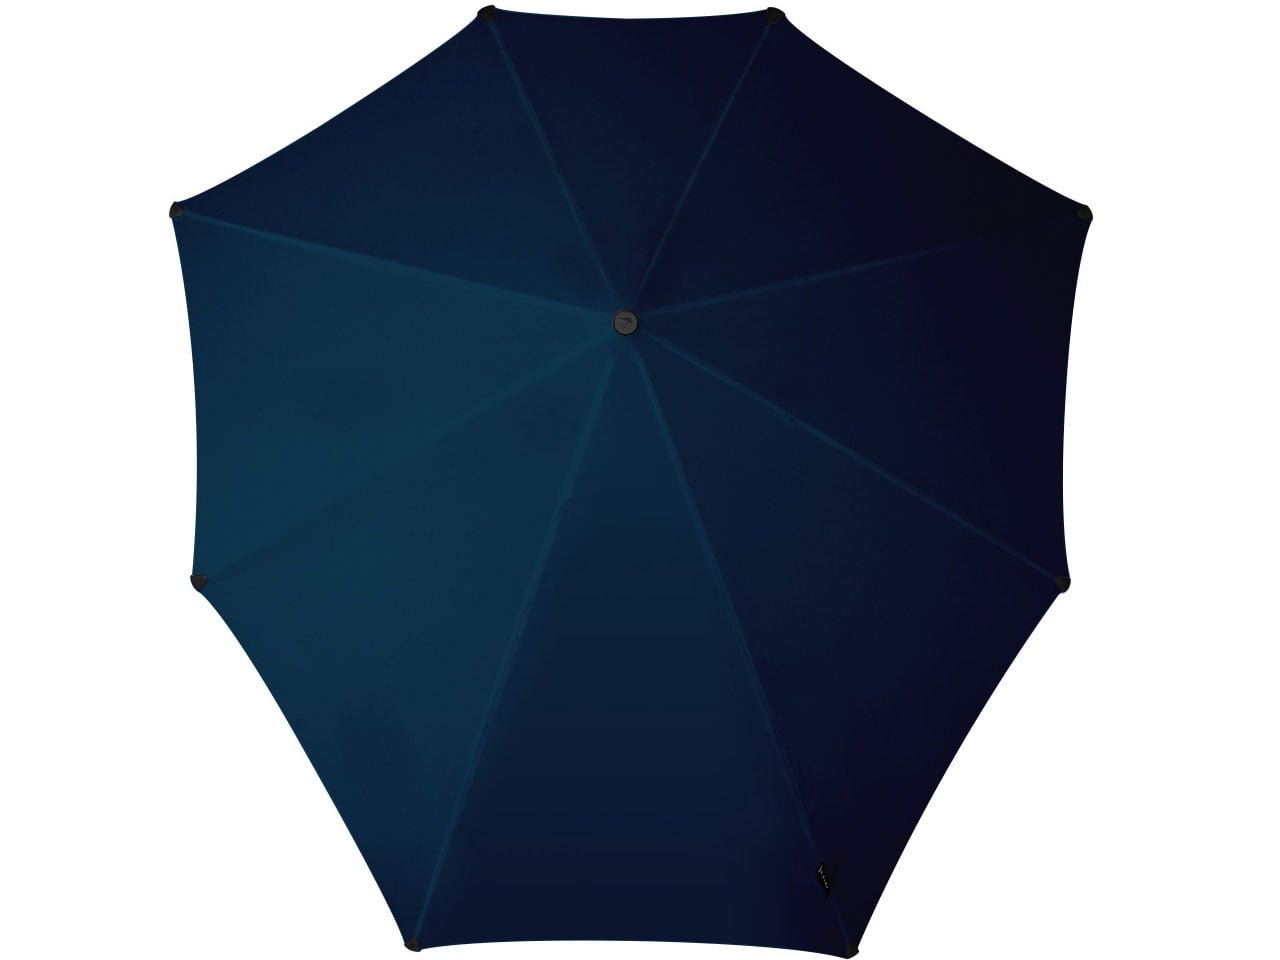 senz° 盛世 - Foldable Umbrella Manual 摺疊防風傘 - Midnight Blue / 夜曲藍 18